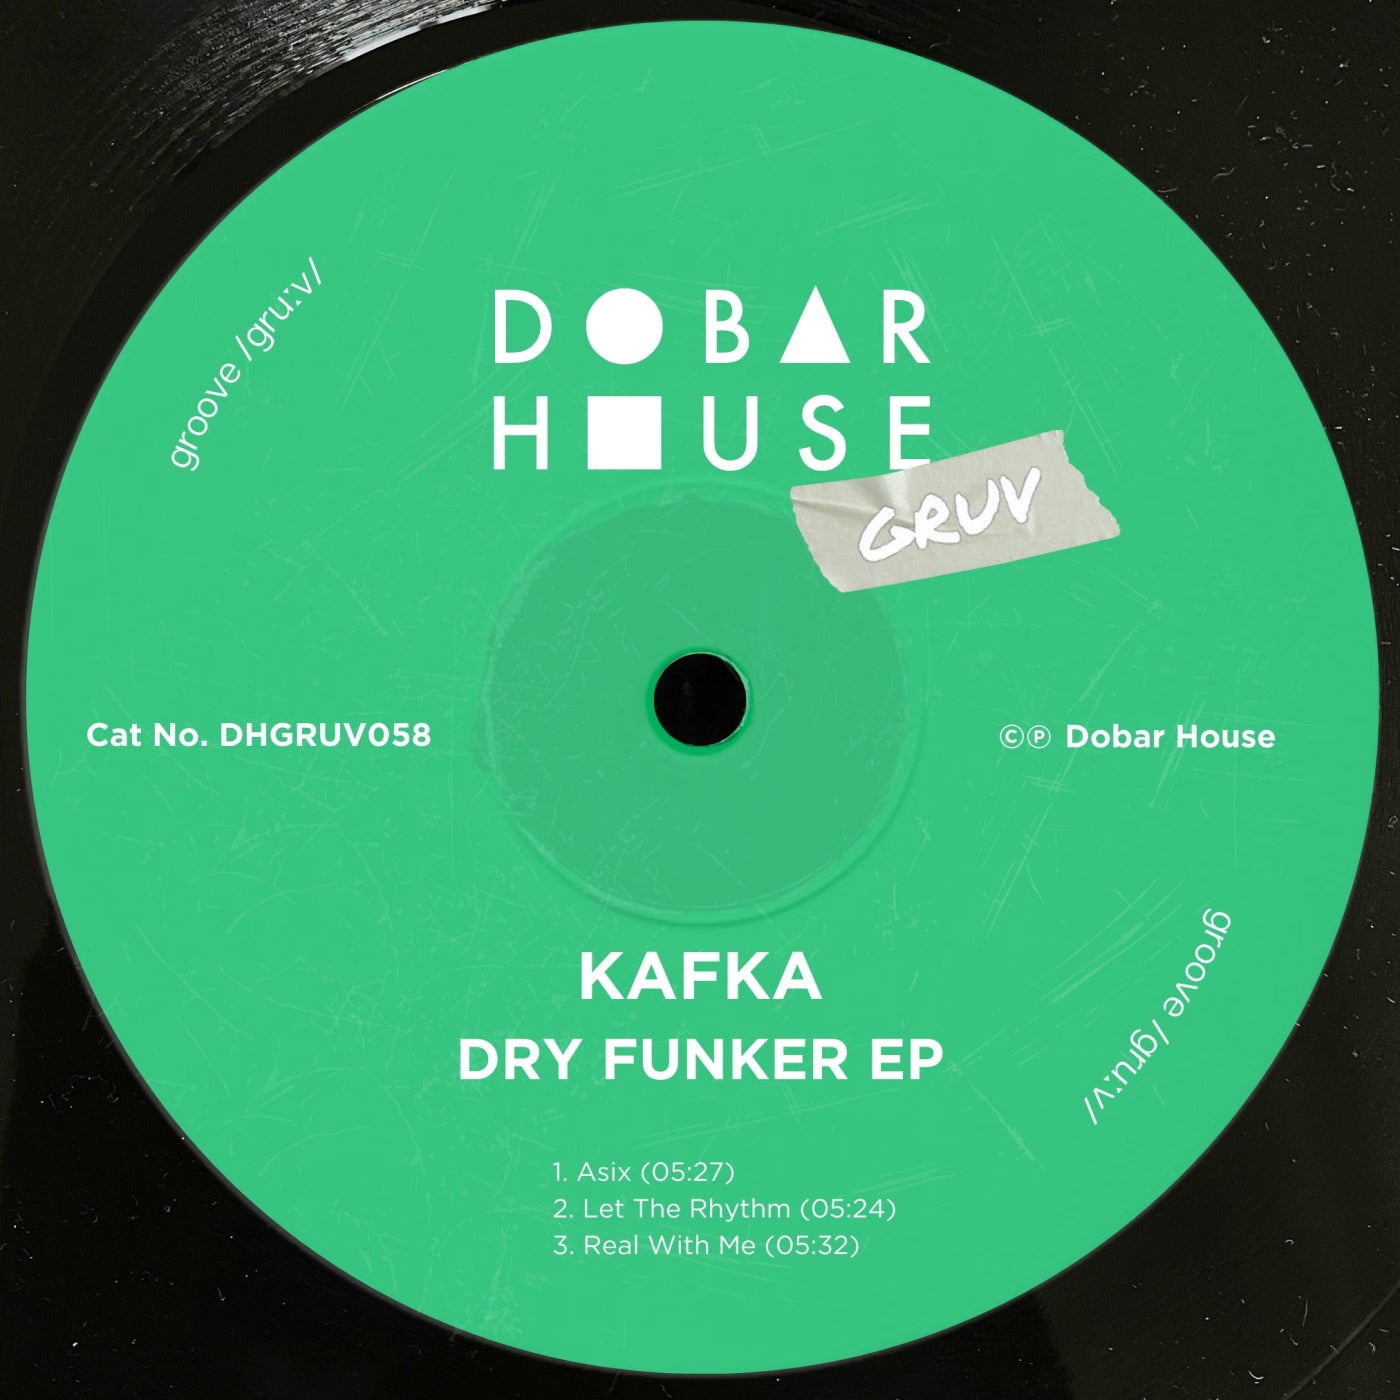 Dry Funker EP